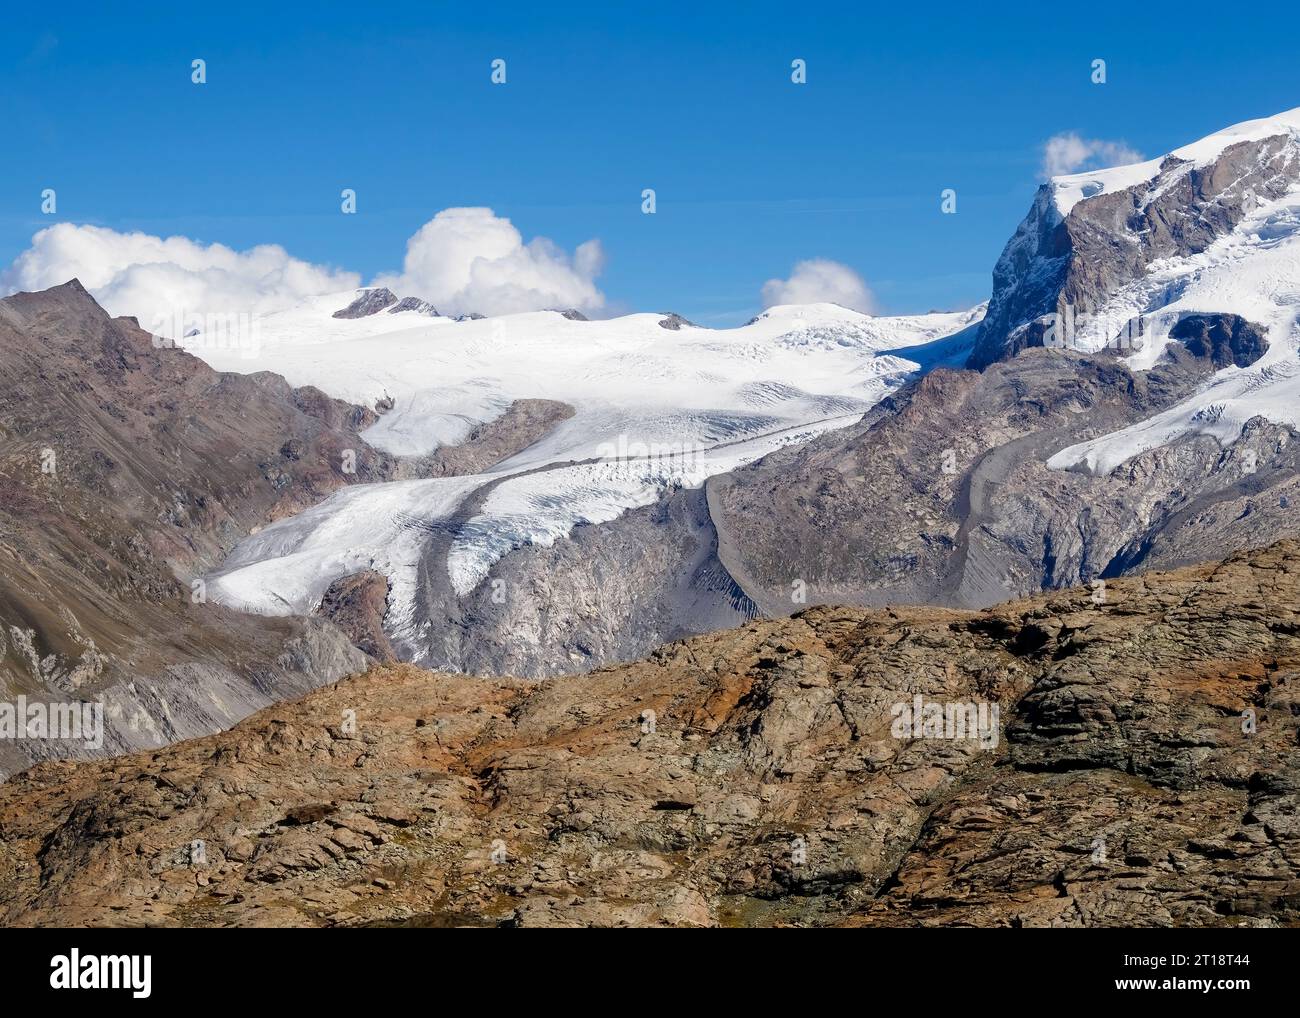 View of a glacier from the matterhorn glacier paradise viewing platform, Zermatt, Switzerland Stock Photo